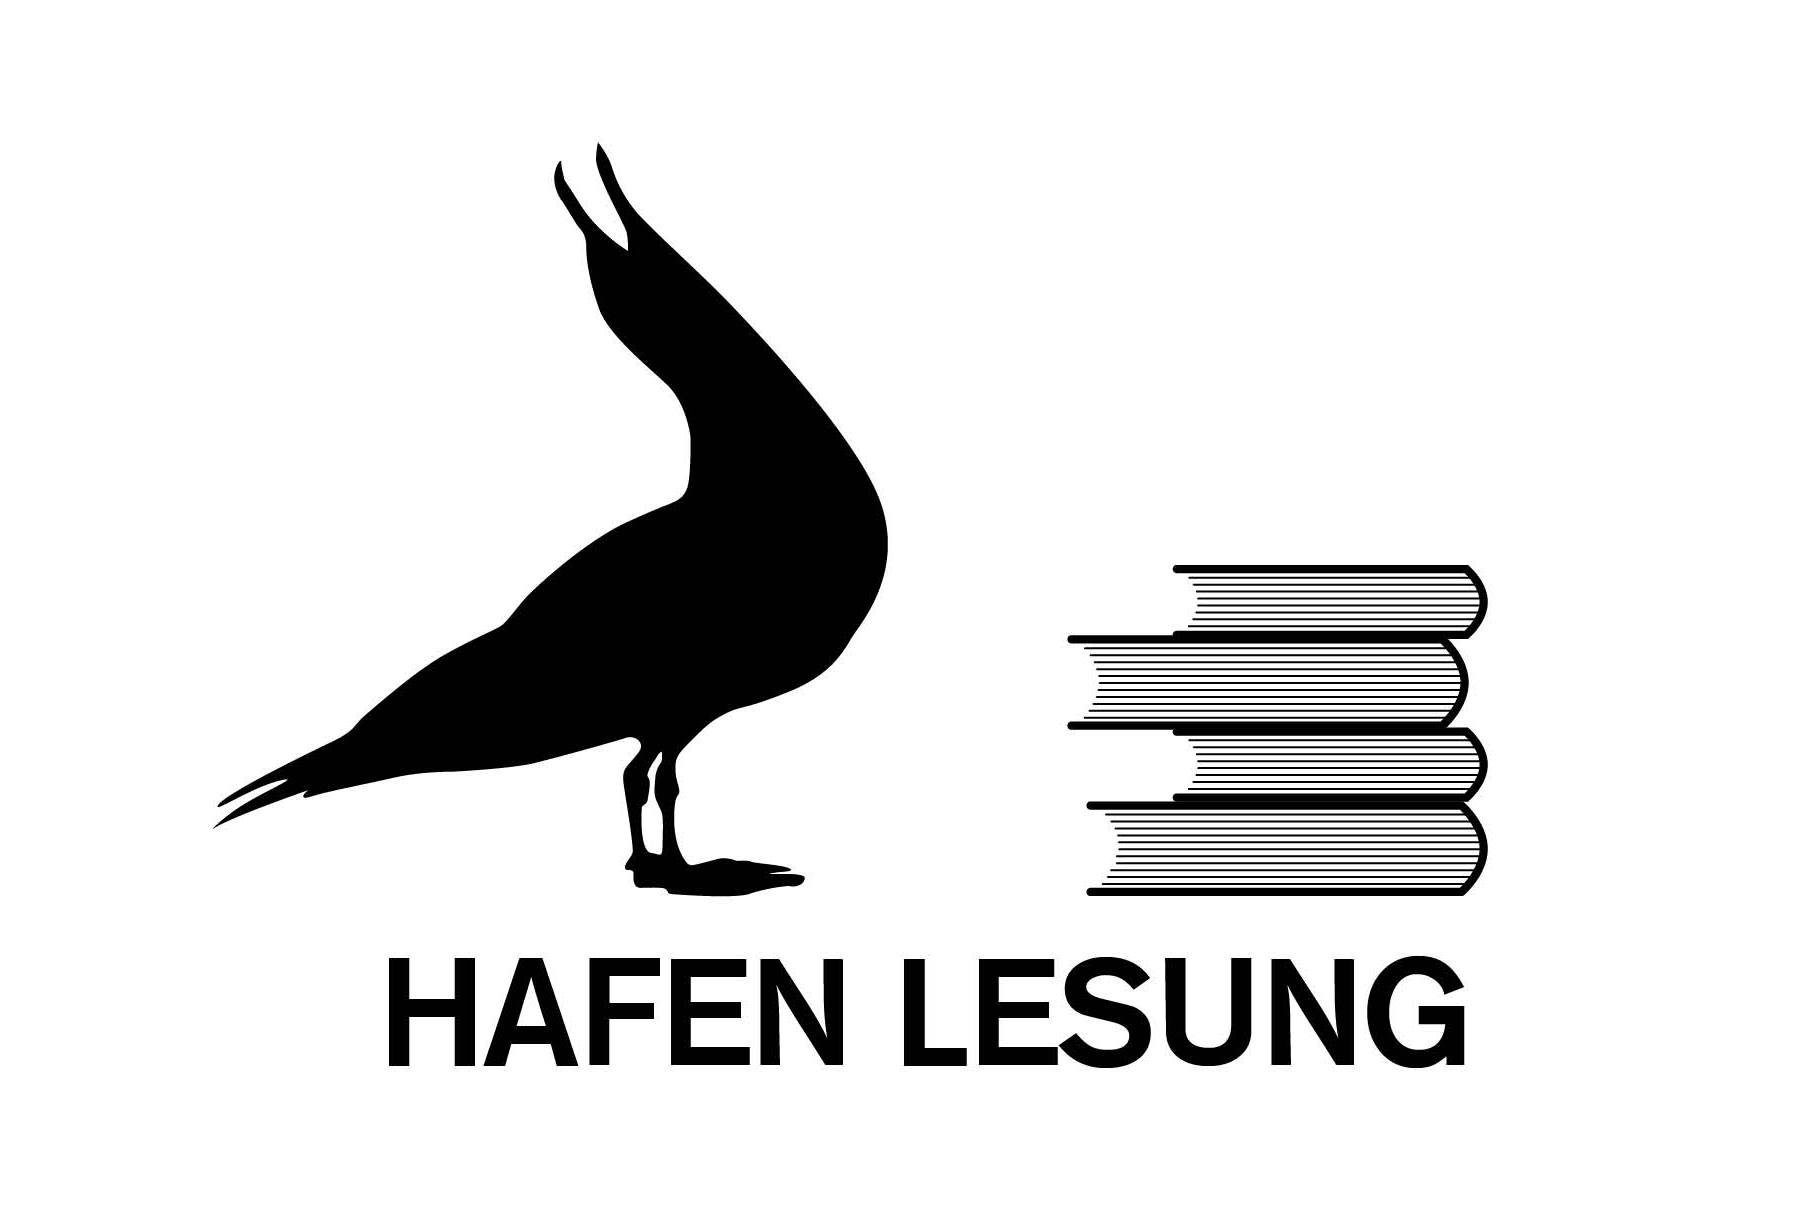 Hafenlesung (Hamburg)